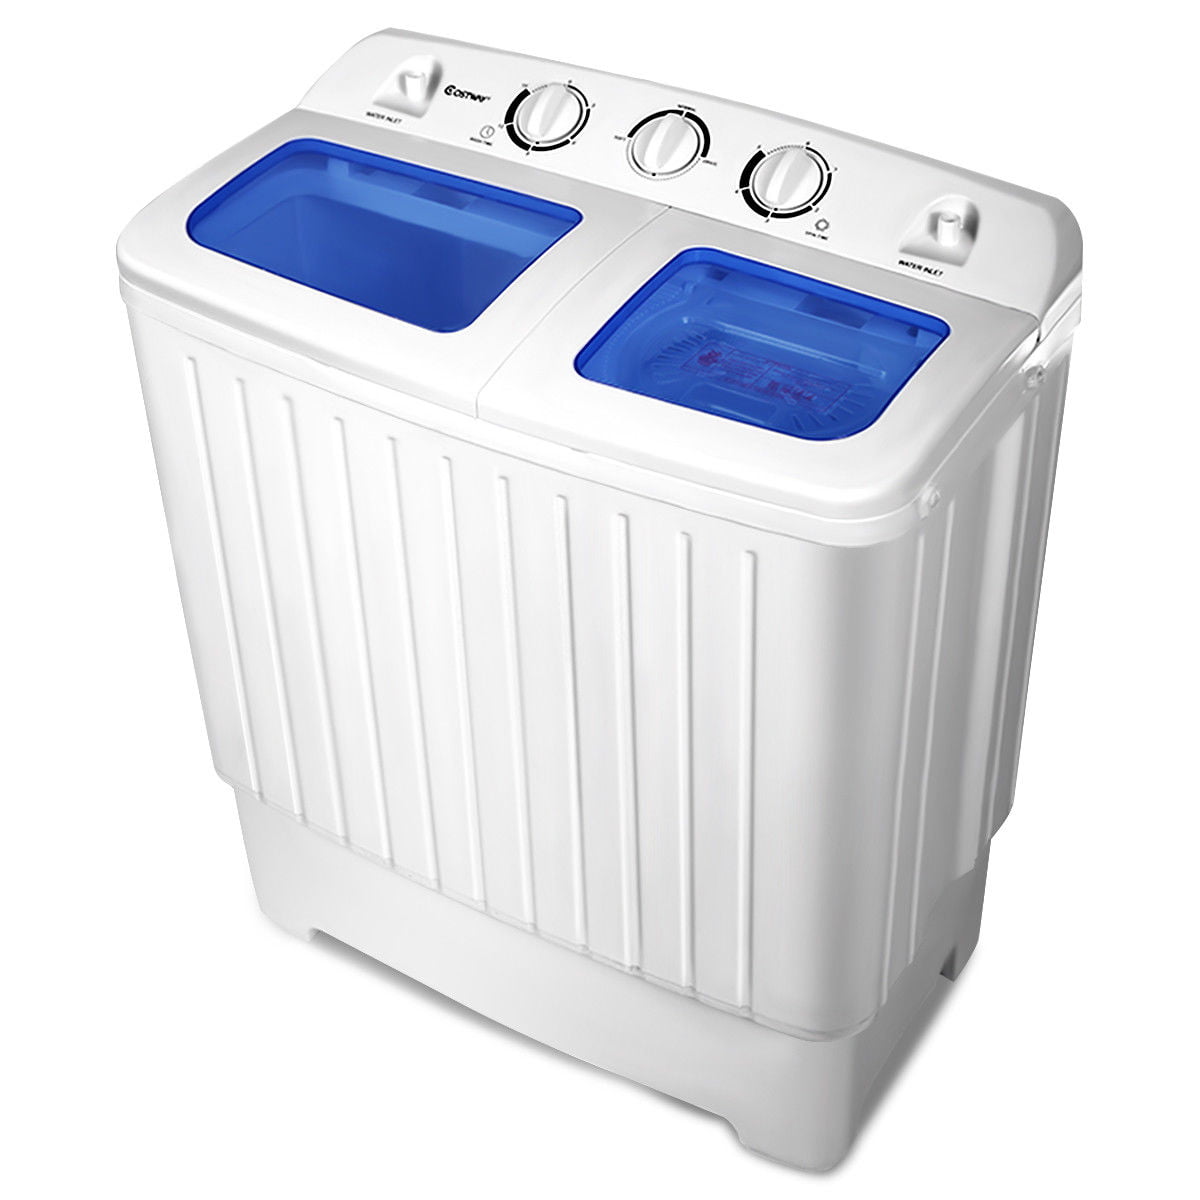 Della Portable Mini Compact Twin Tub Washing Machine Washer Spin Wash and Dryer Cycle (9KG) w